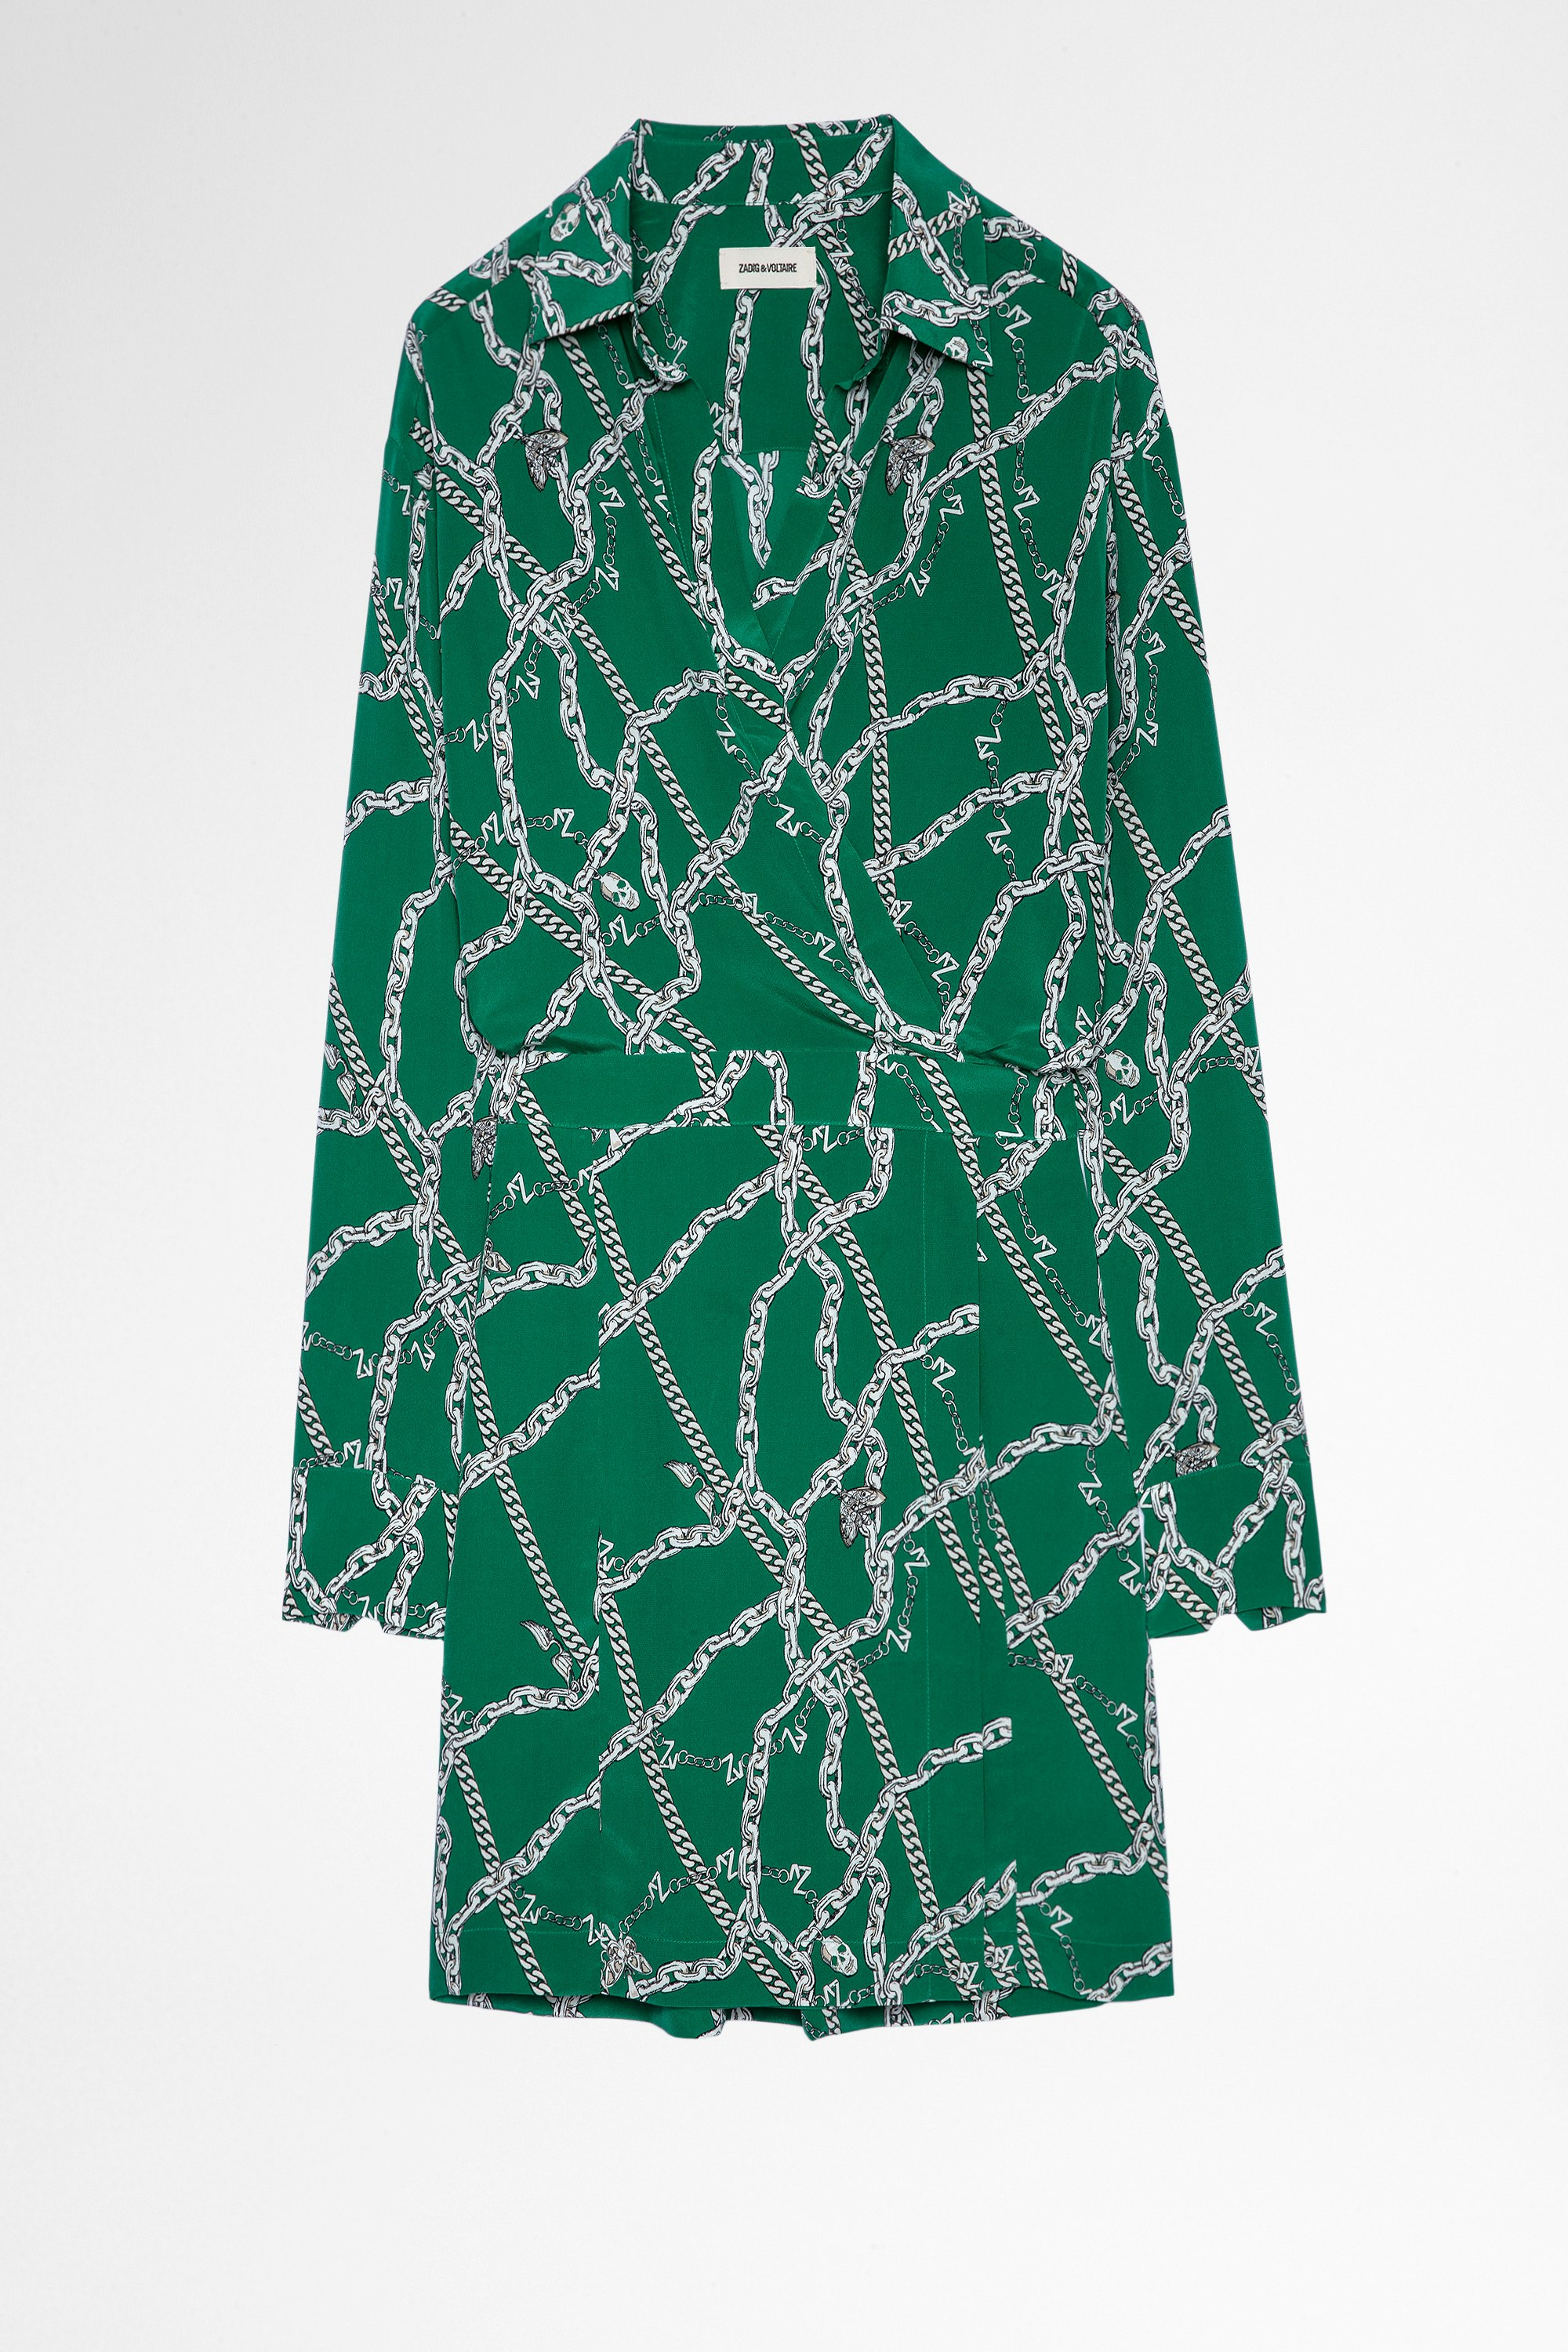 Ravy シルクドレス Women's green silk dress with chain pattern